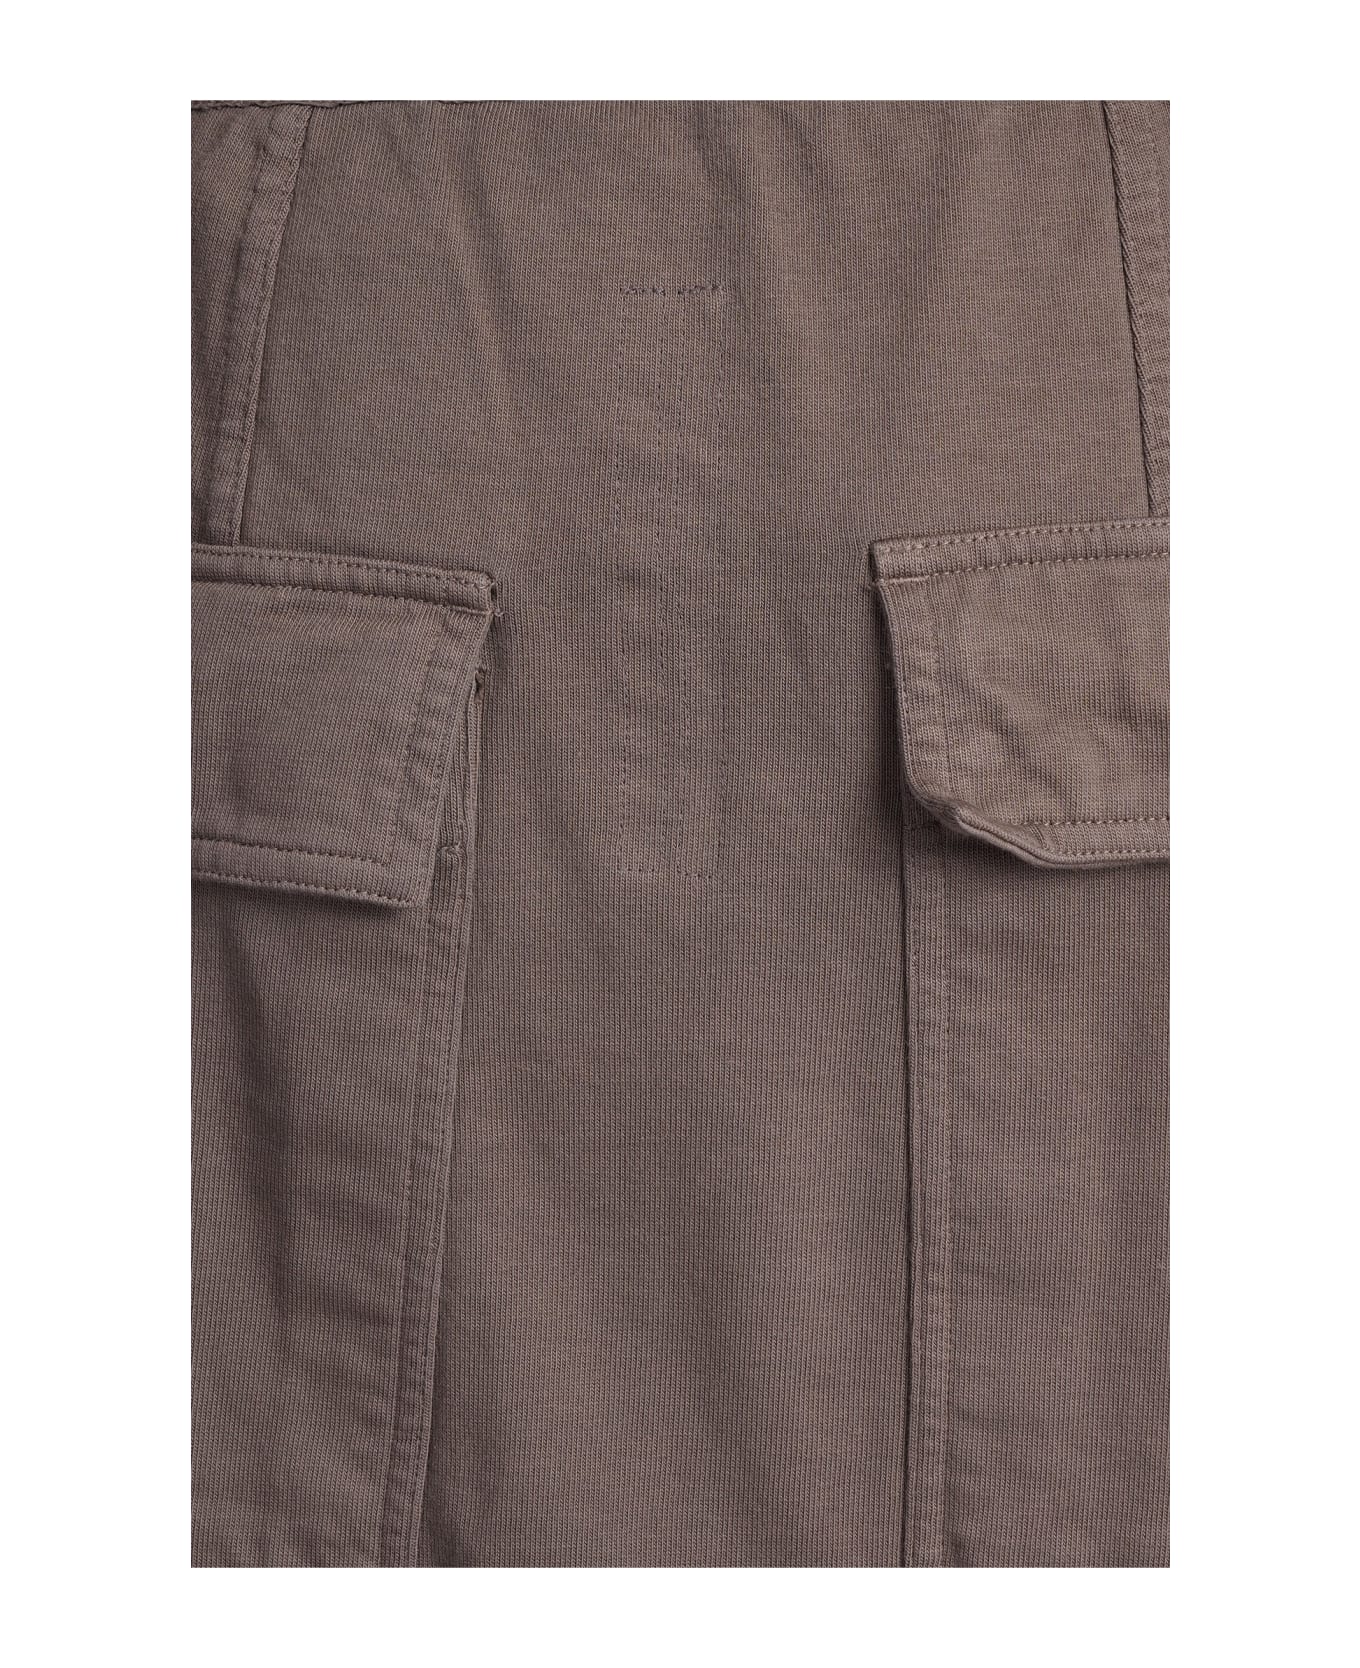 DRKSHDW Prisoner Drawstring Pants In Brown Cotton - brown